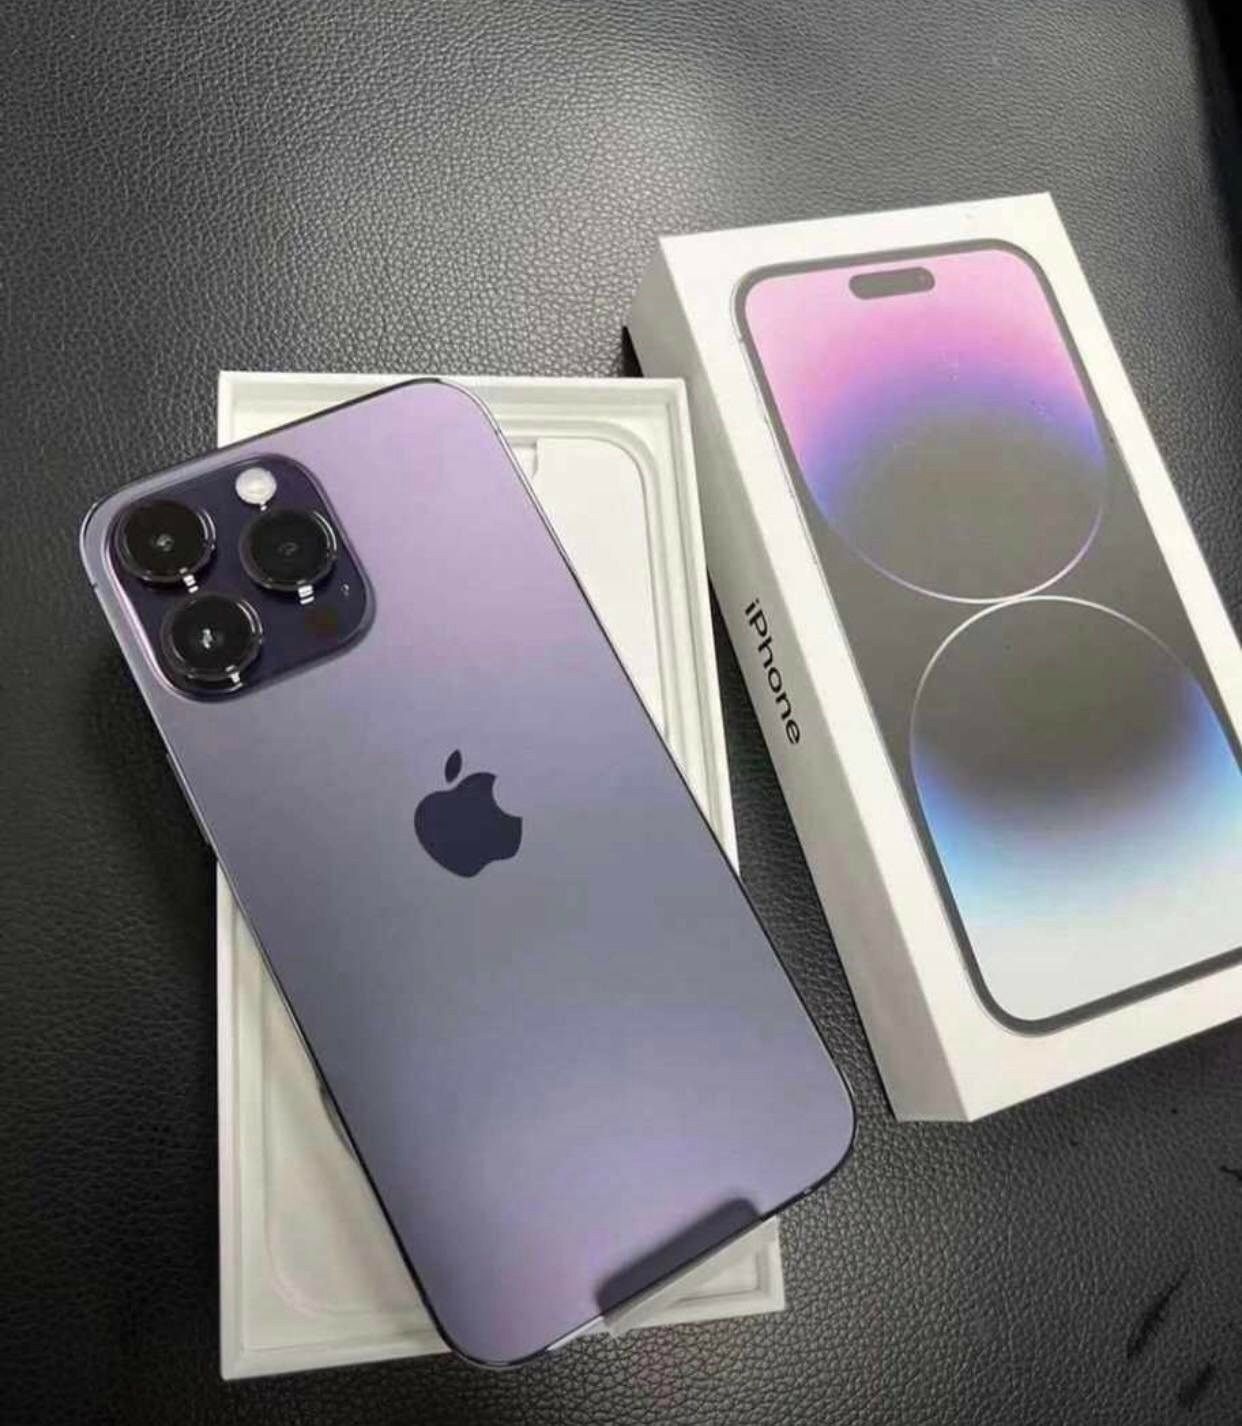 iphone 14 pro max purple